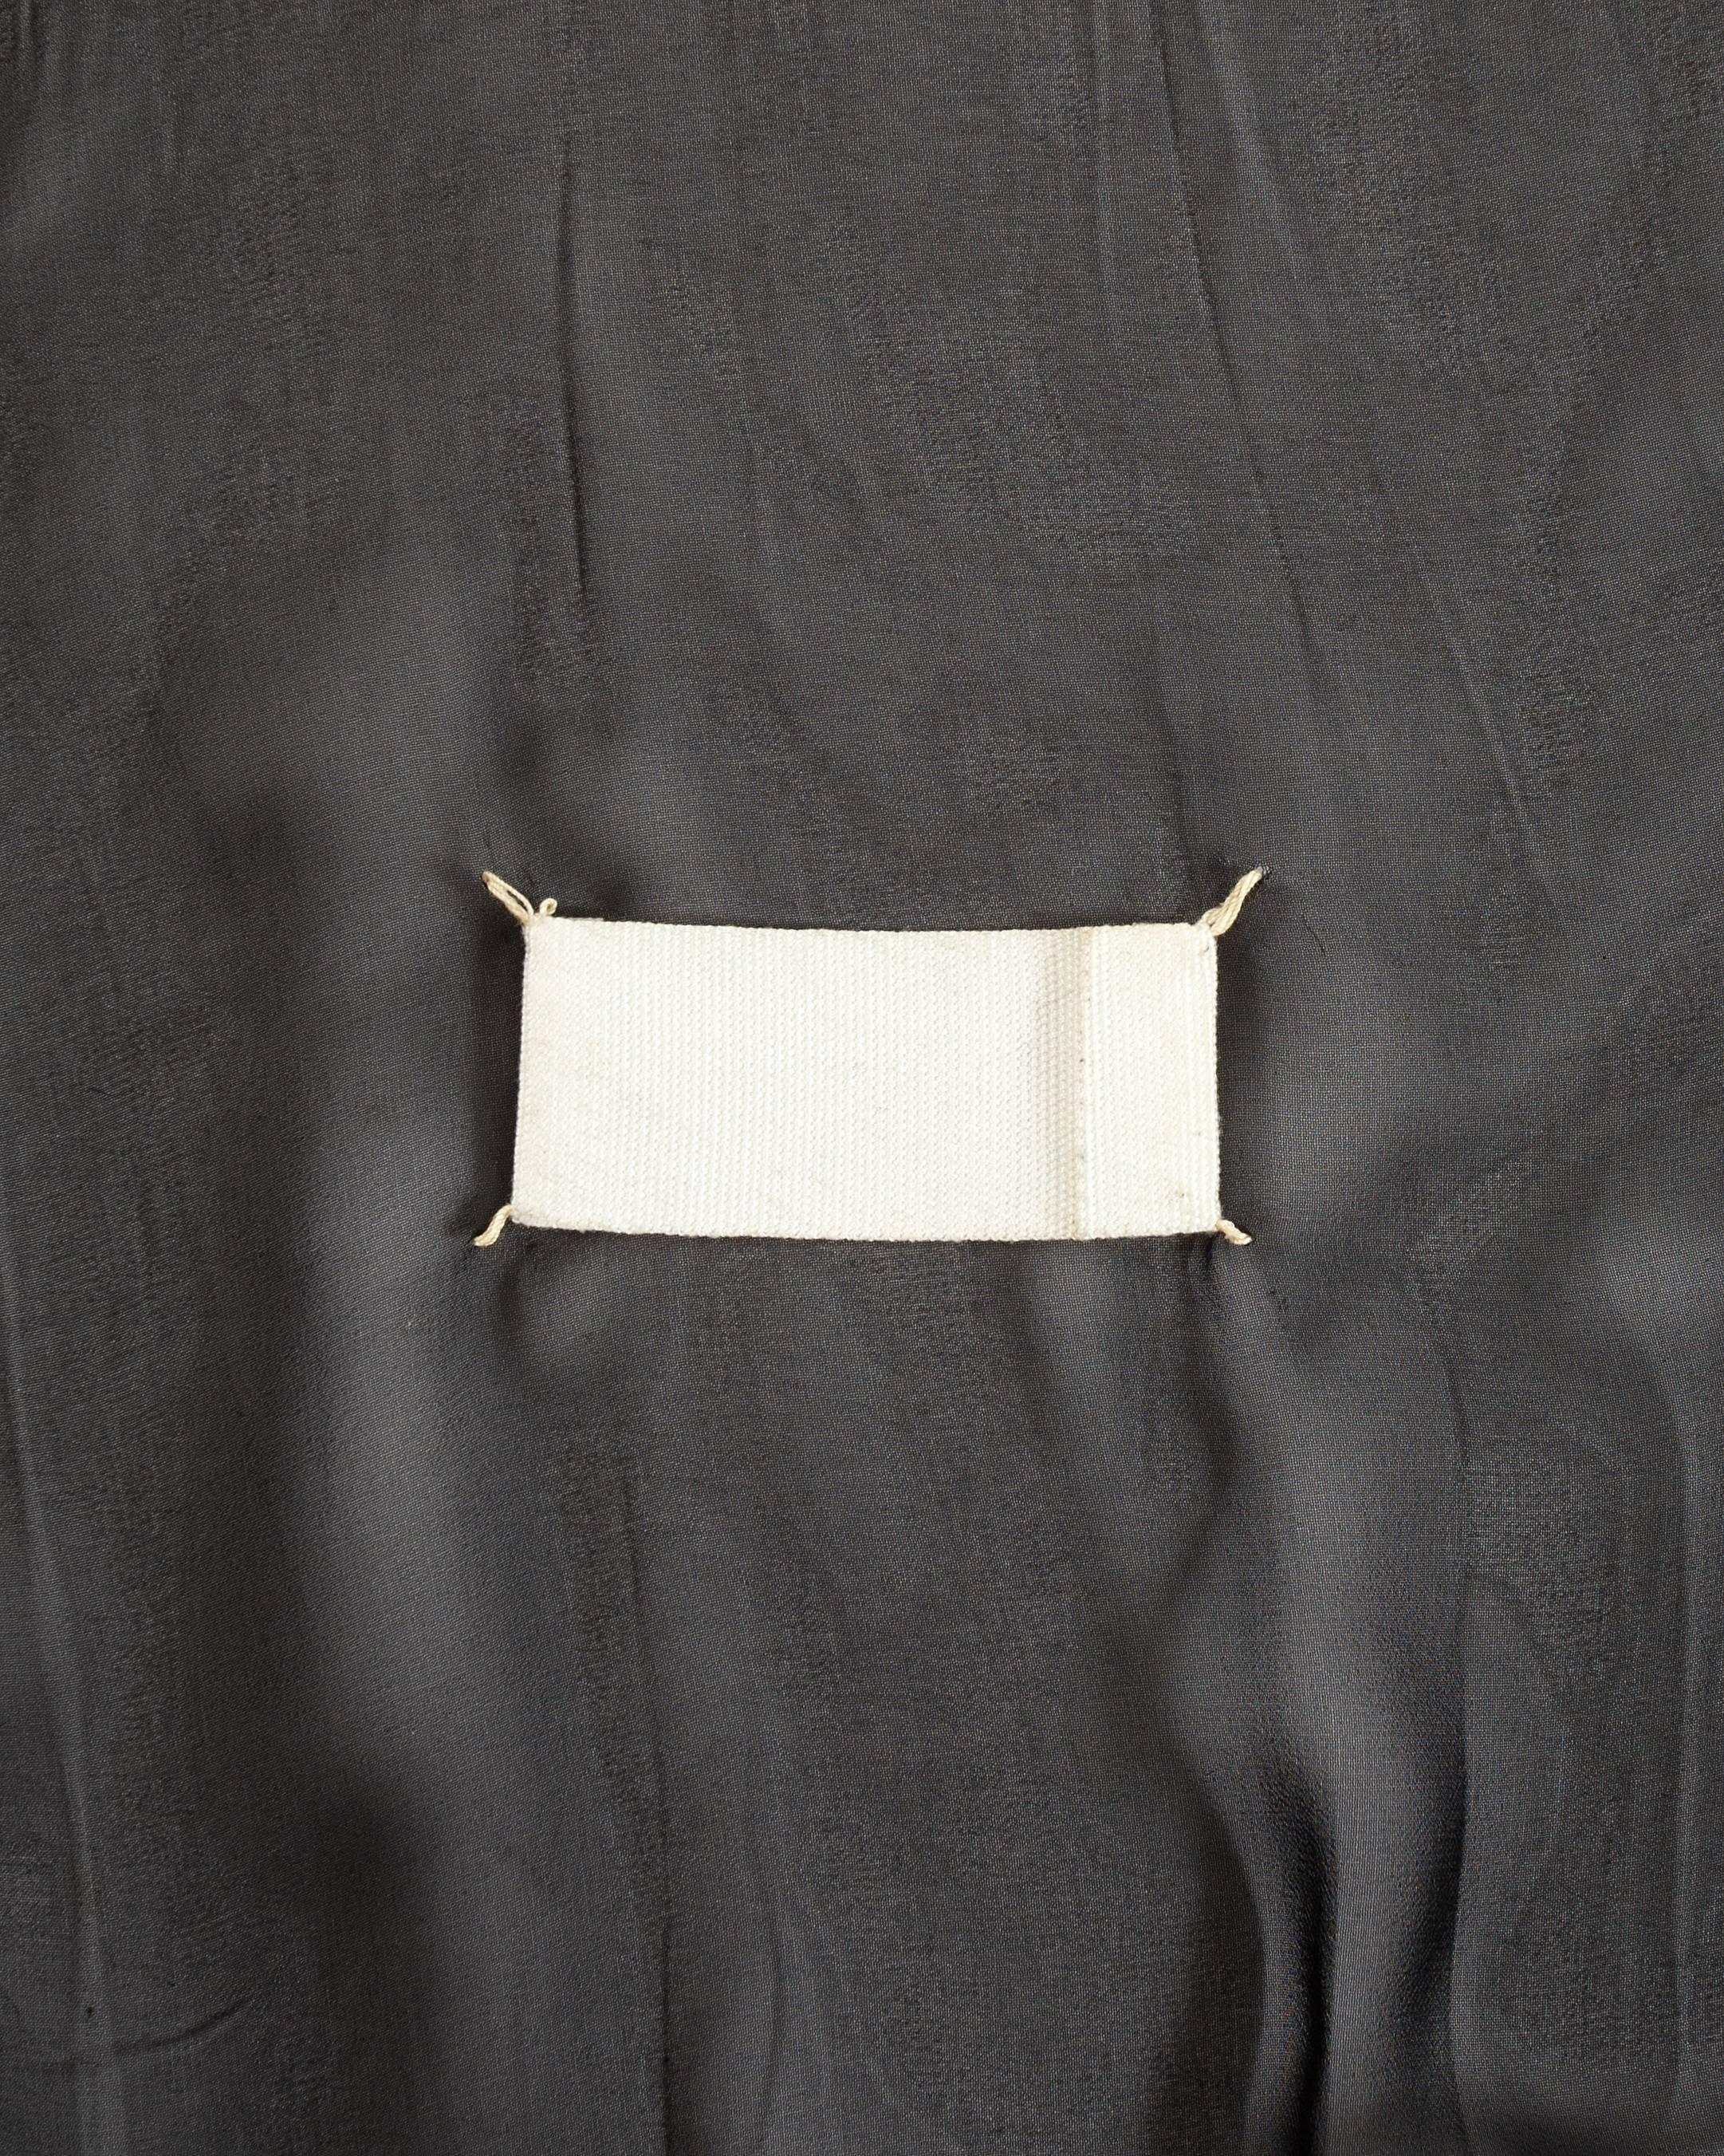 Women's Martin Margiela black silk chiffon evening wrap dress with metal s-hook, ss 1999 For Sale